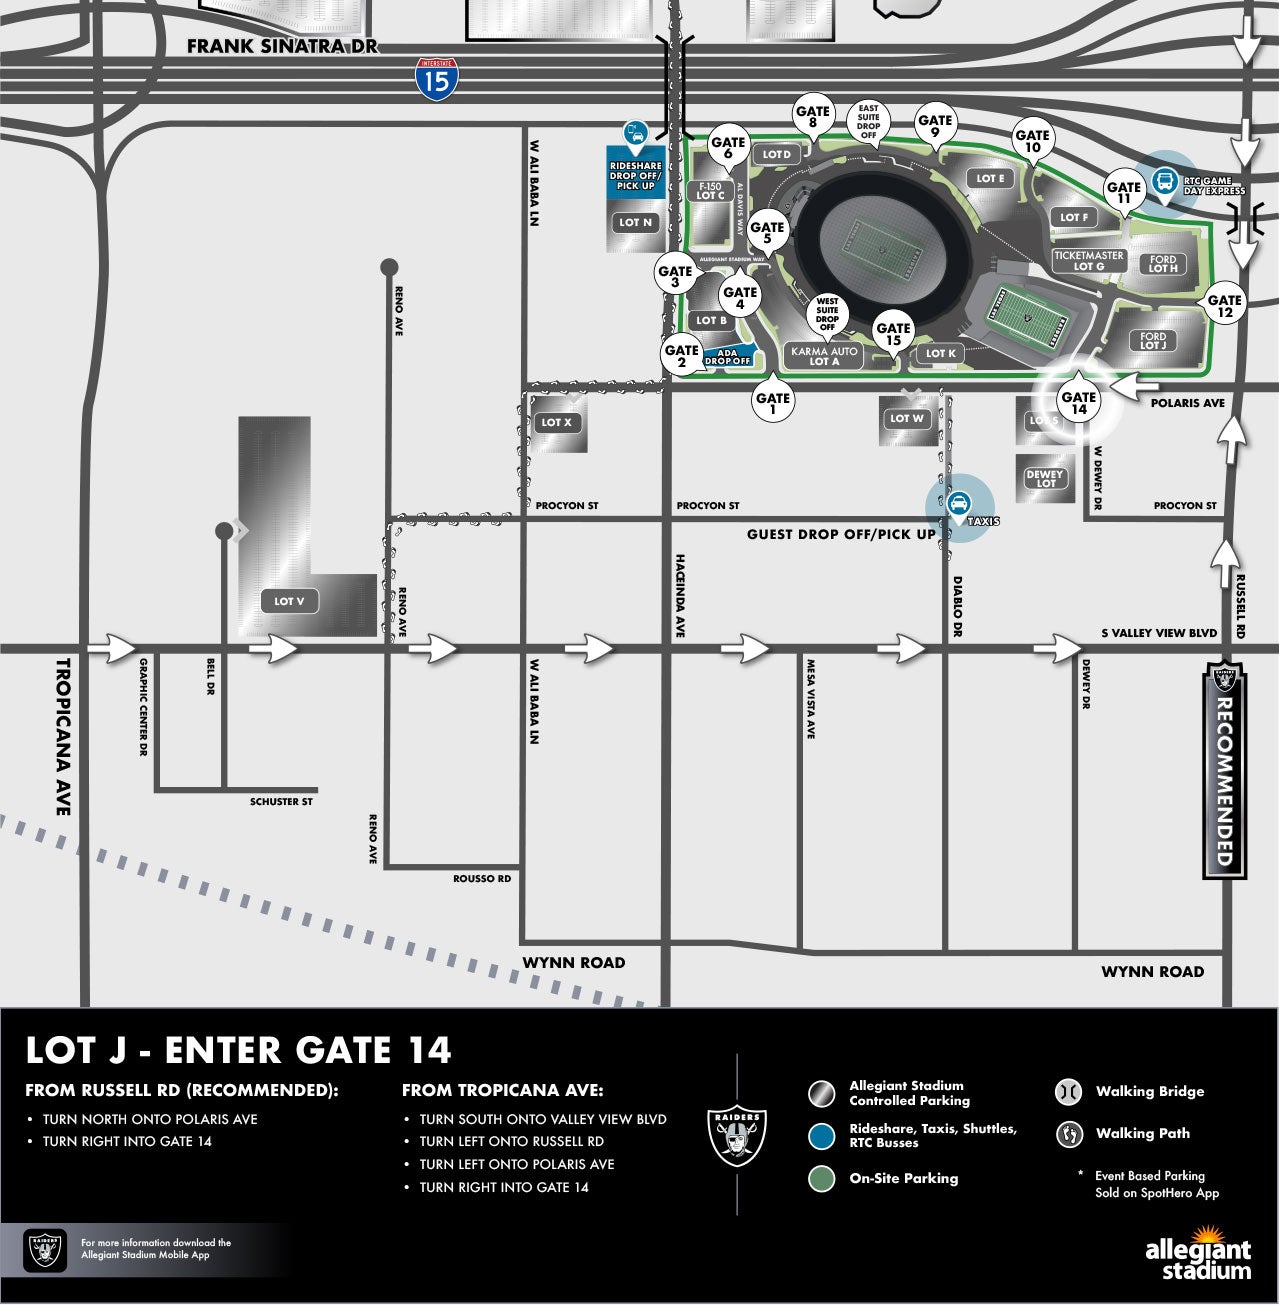 Lot J Parking Map - Enter Gate 14